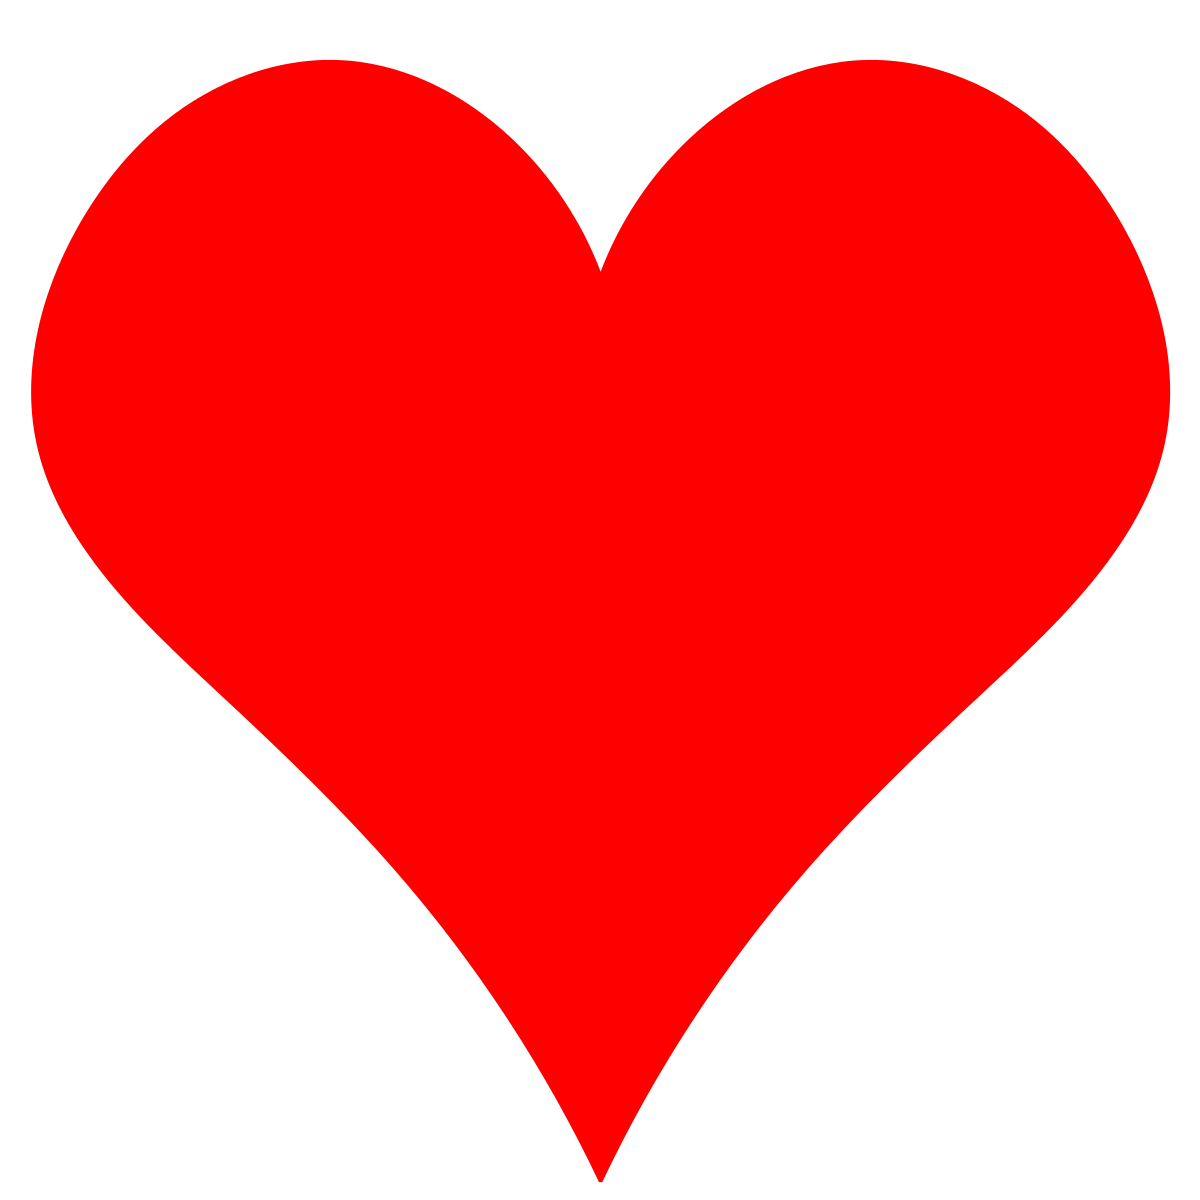 Plain Red Heart Shape Clipart by GR8DAN : Heart Cliparts #11504 ...